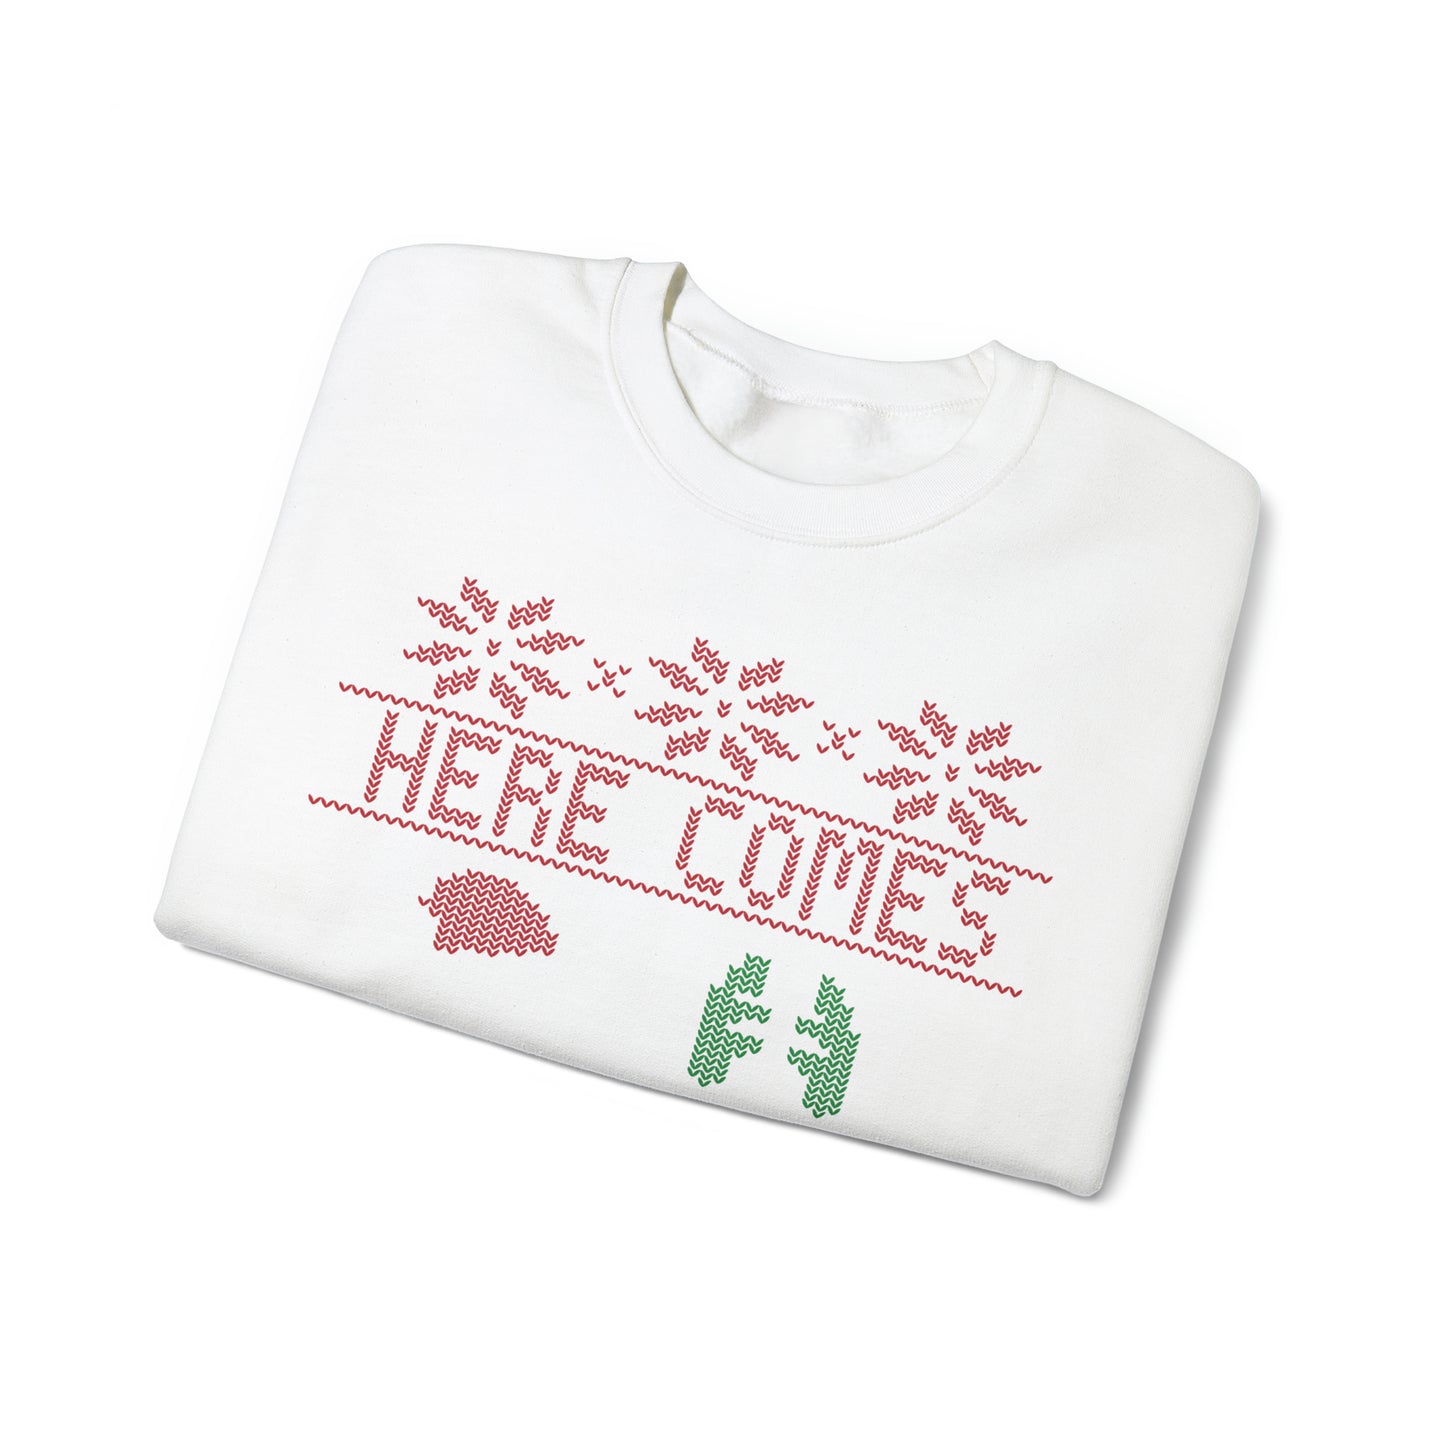 Here Comes Santa Floss Dental Christmas Sweatshirt